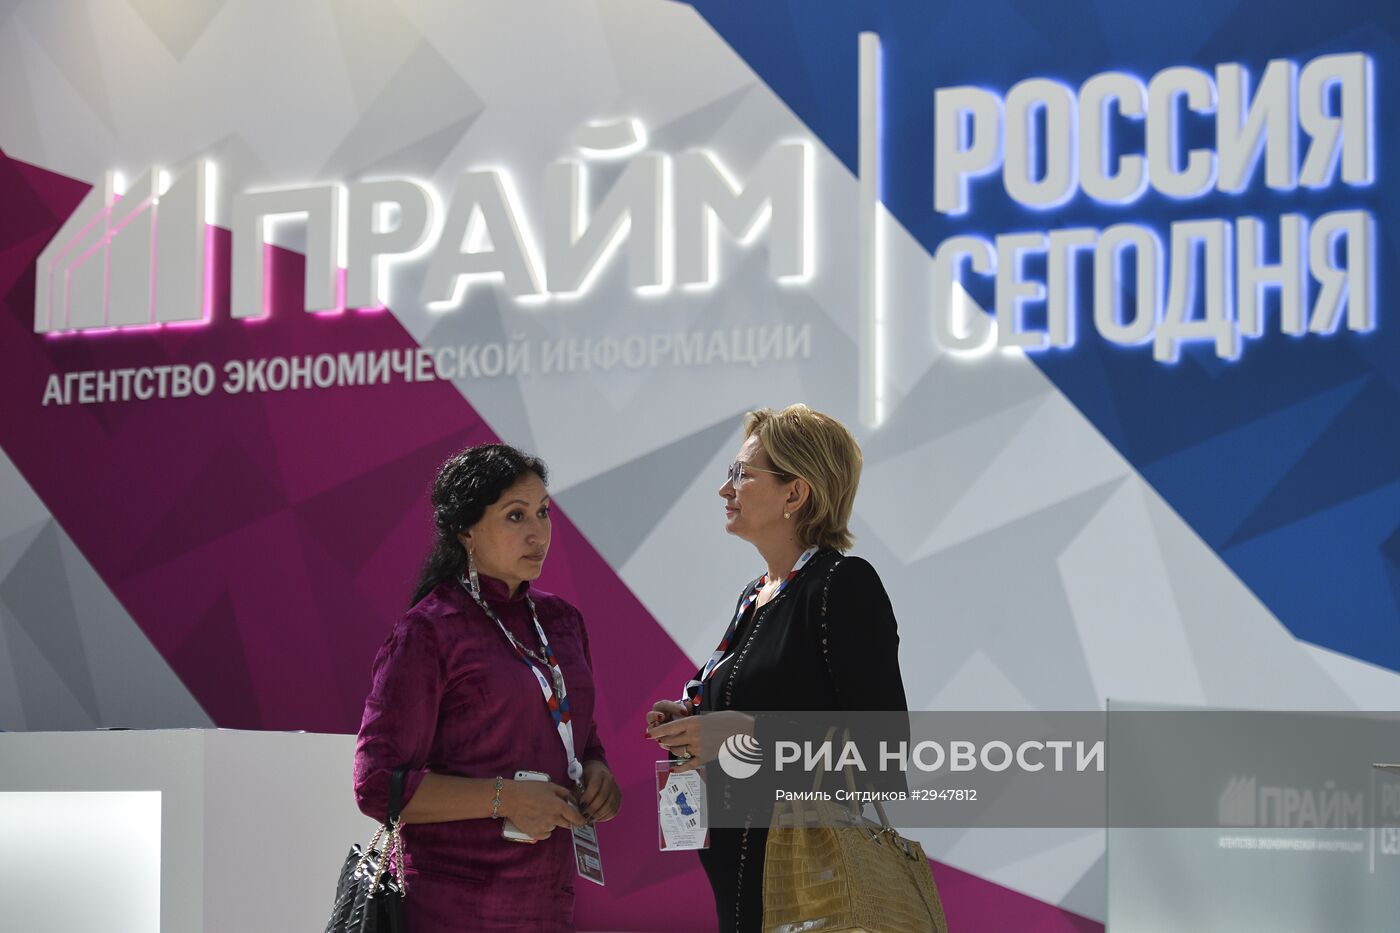 Международный инвестиционный форум "Сочи 2016"